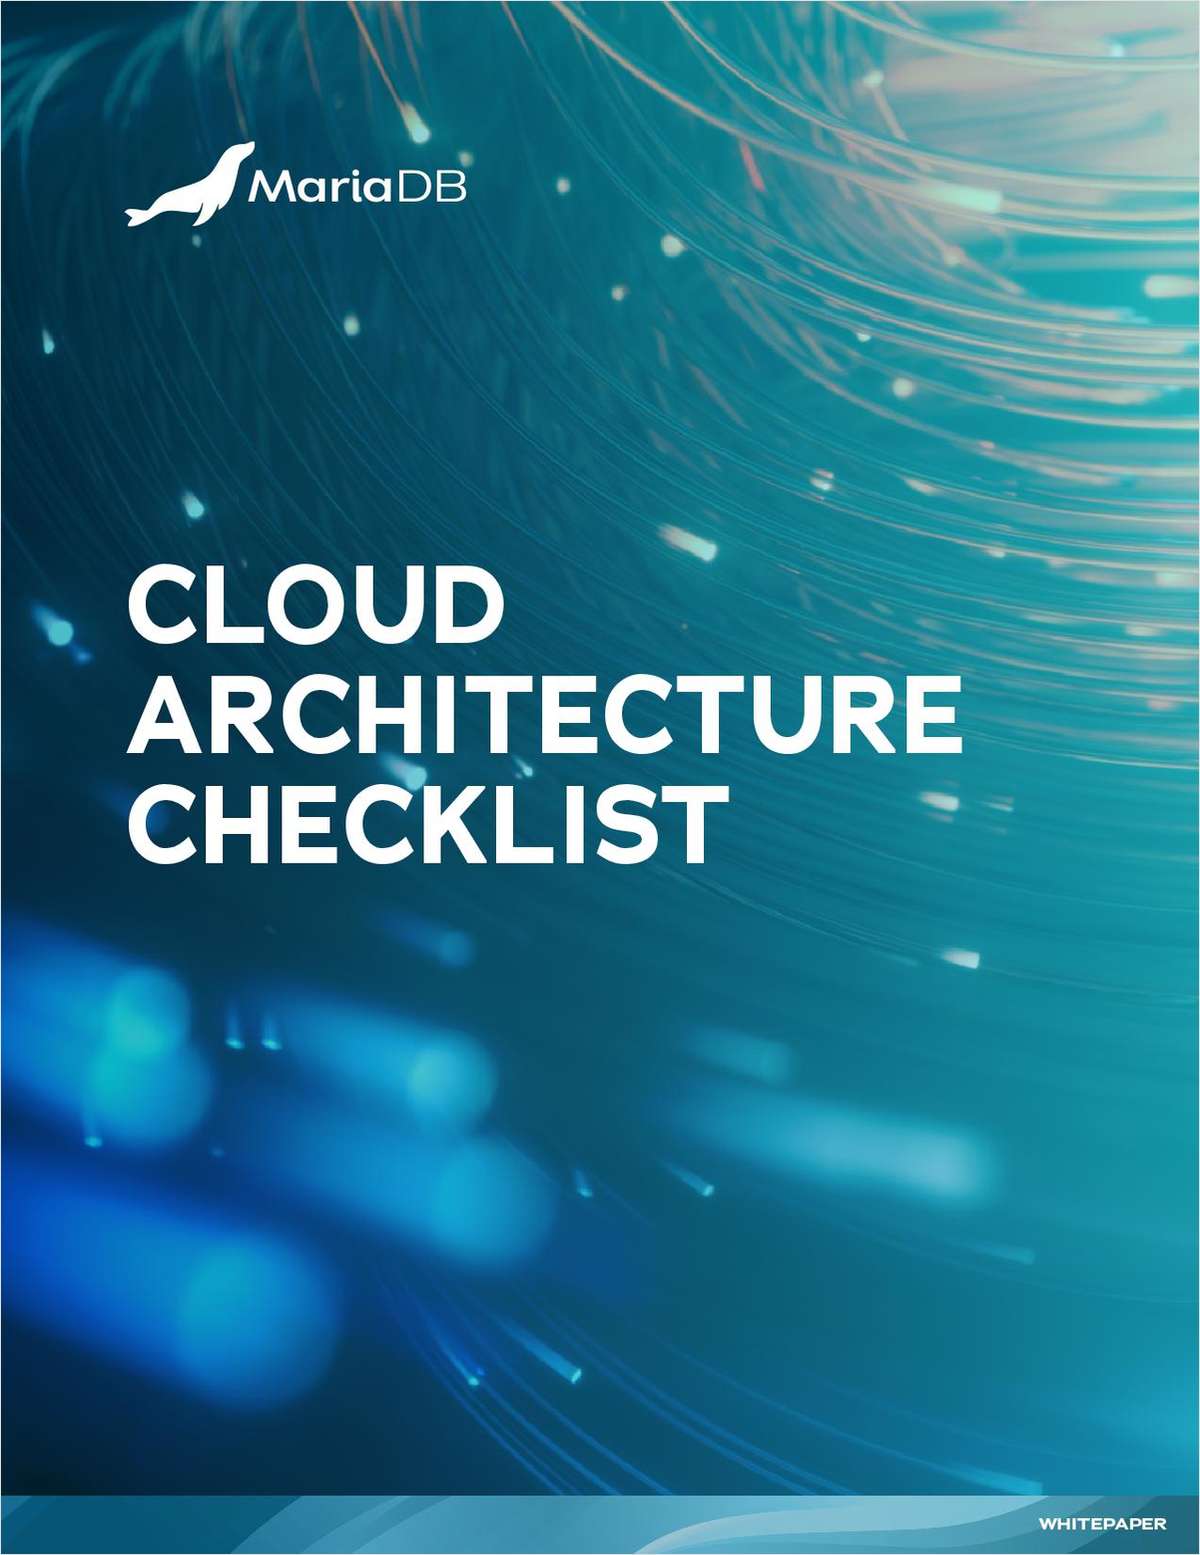 A Cloud Architecture Checklist